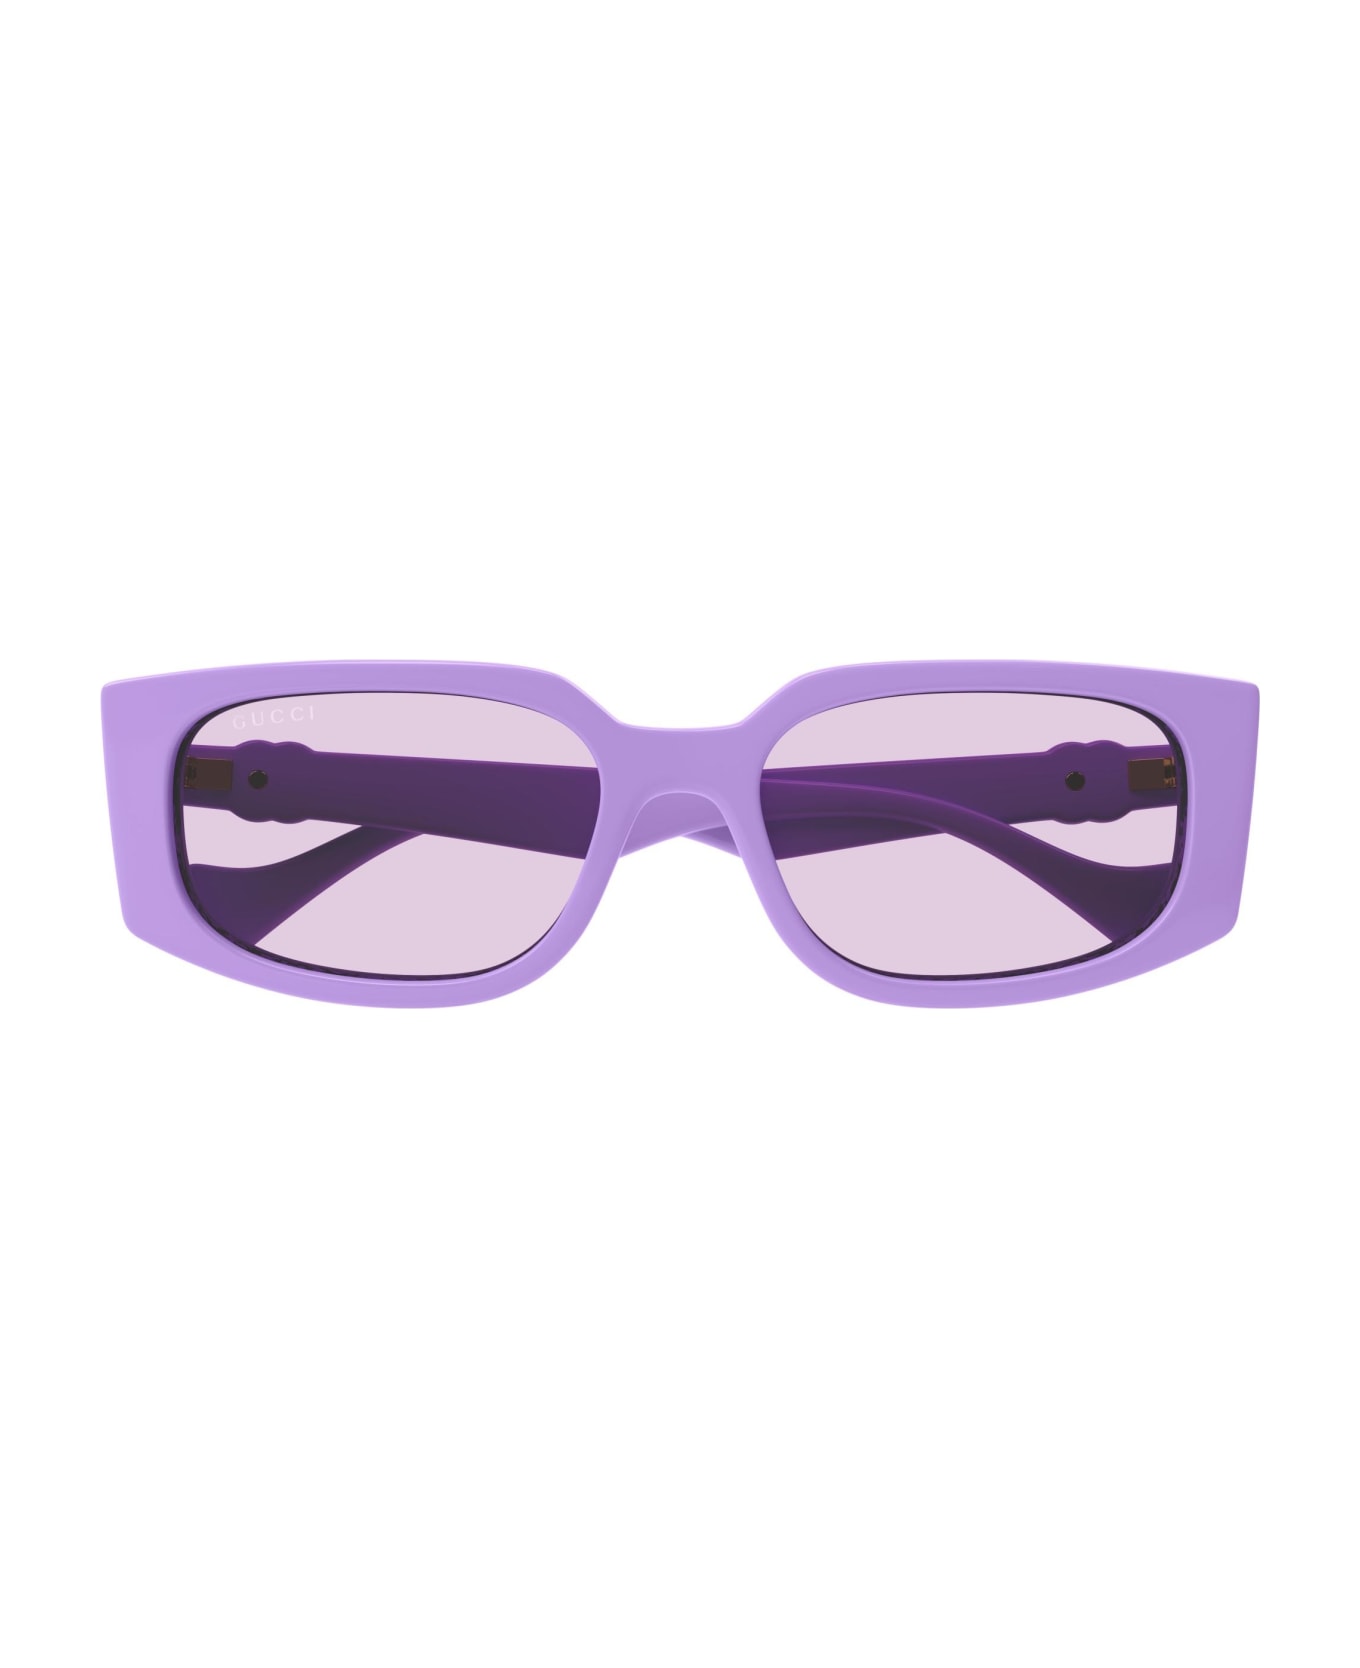 Gucci Eyewear Sunglasses - Viola/Viola サングラス